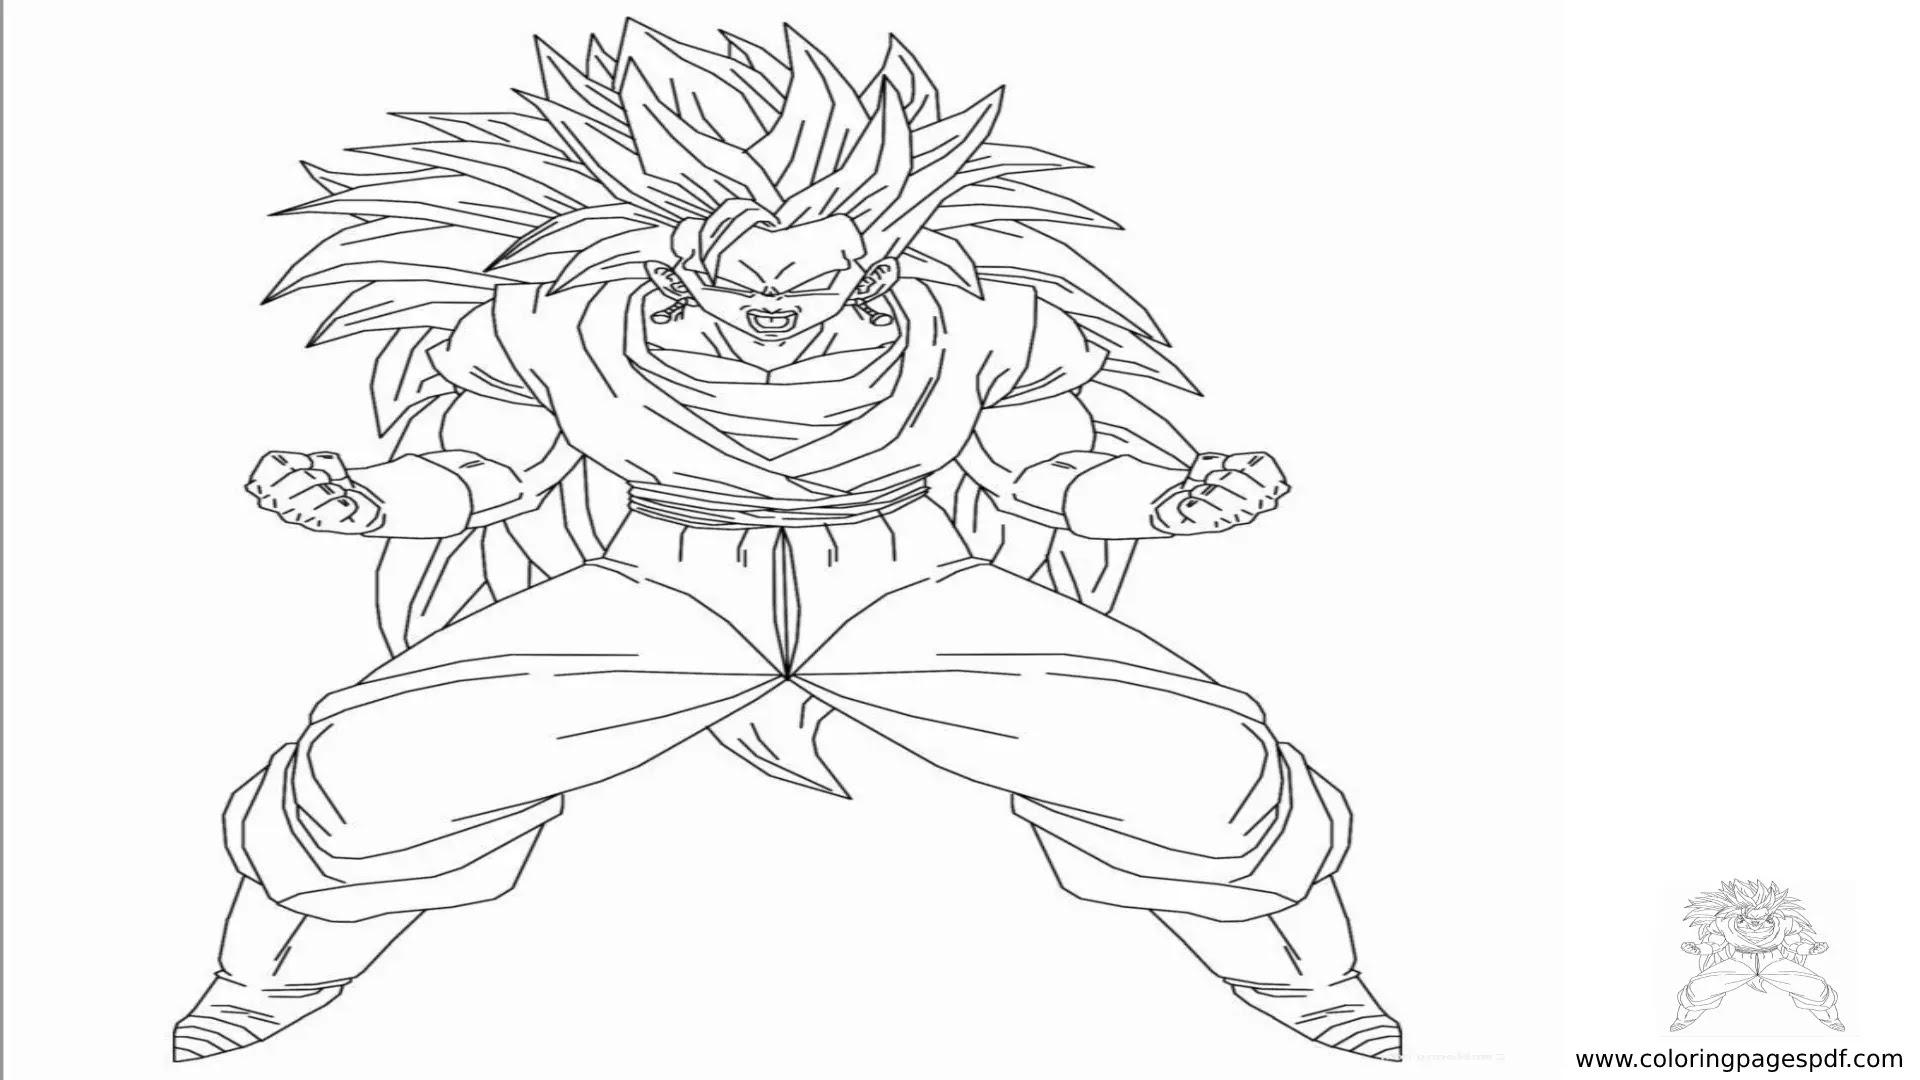 Coloring Page Of Goku Super Saiyan 20